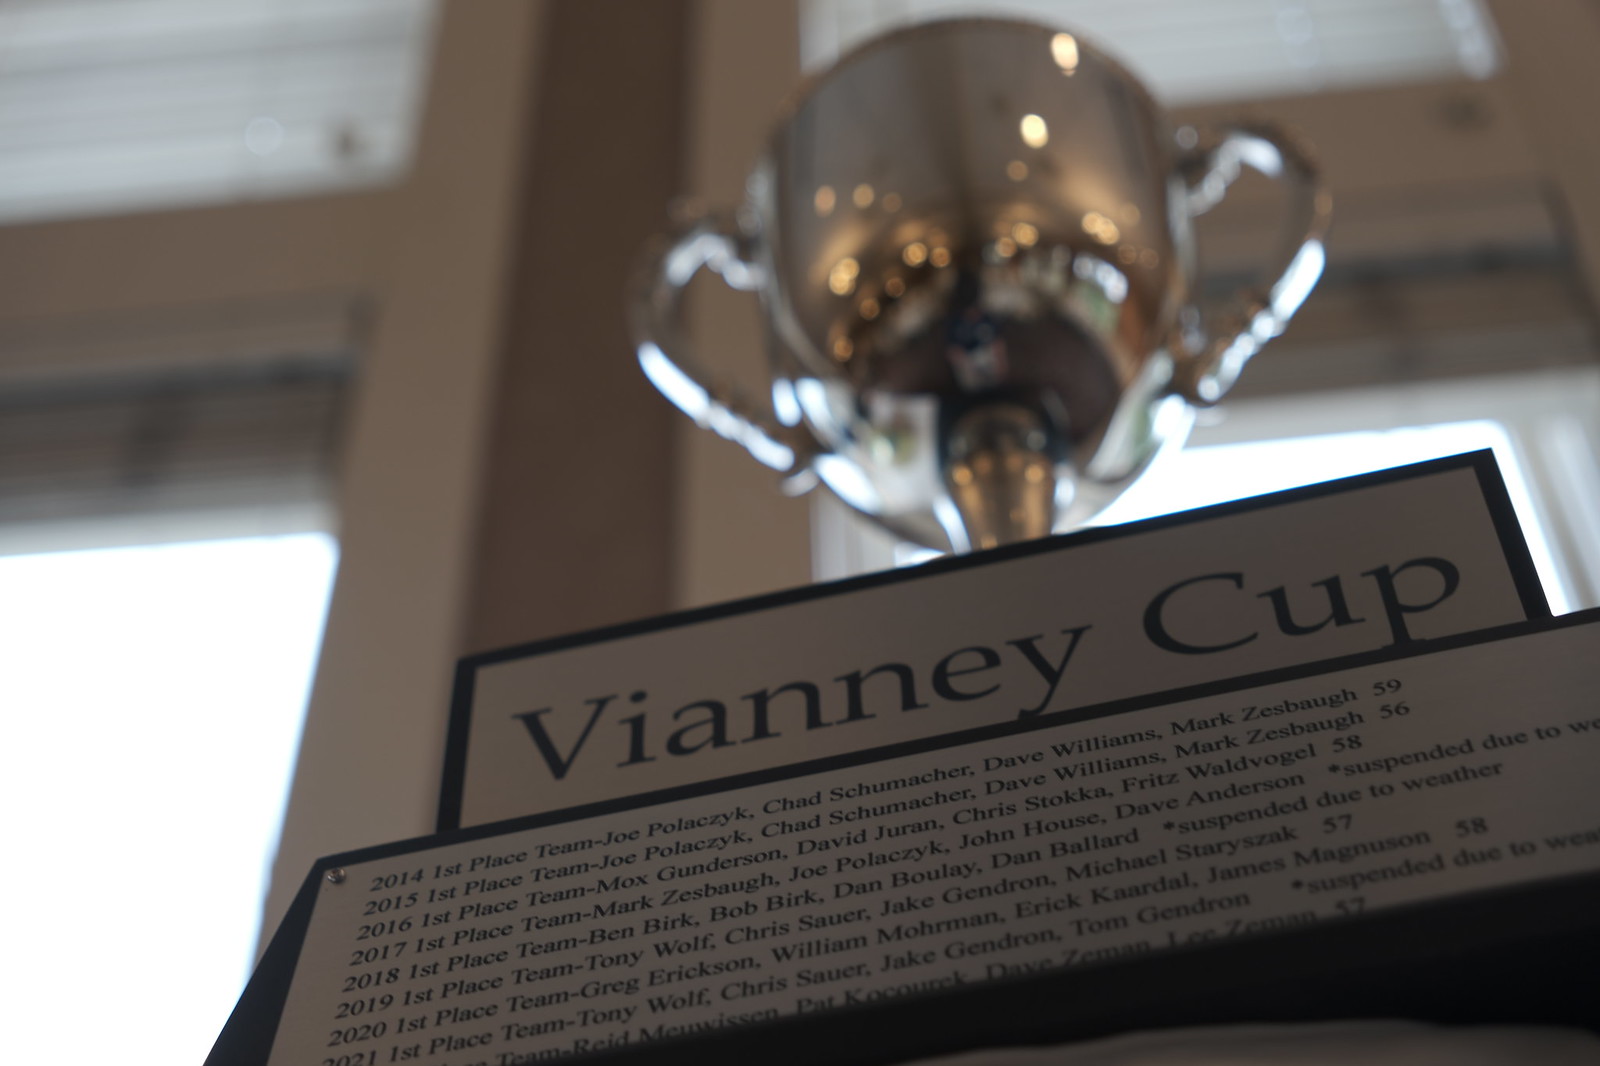 Vianney Cup 2023